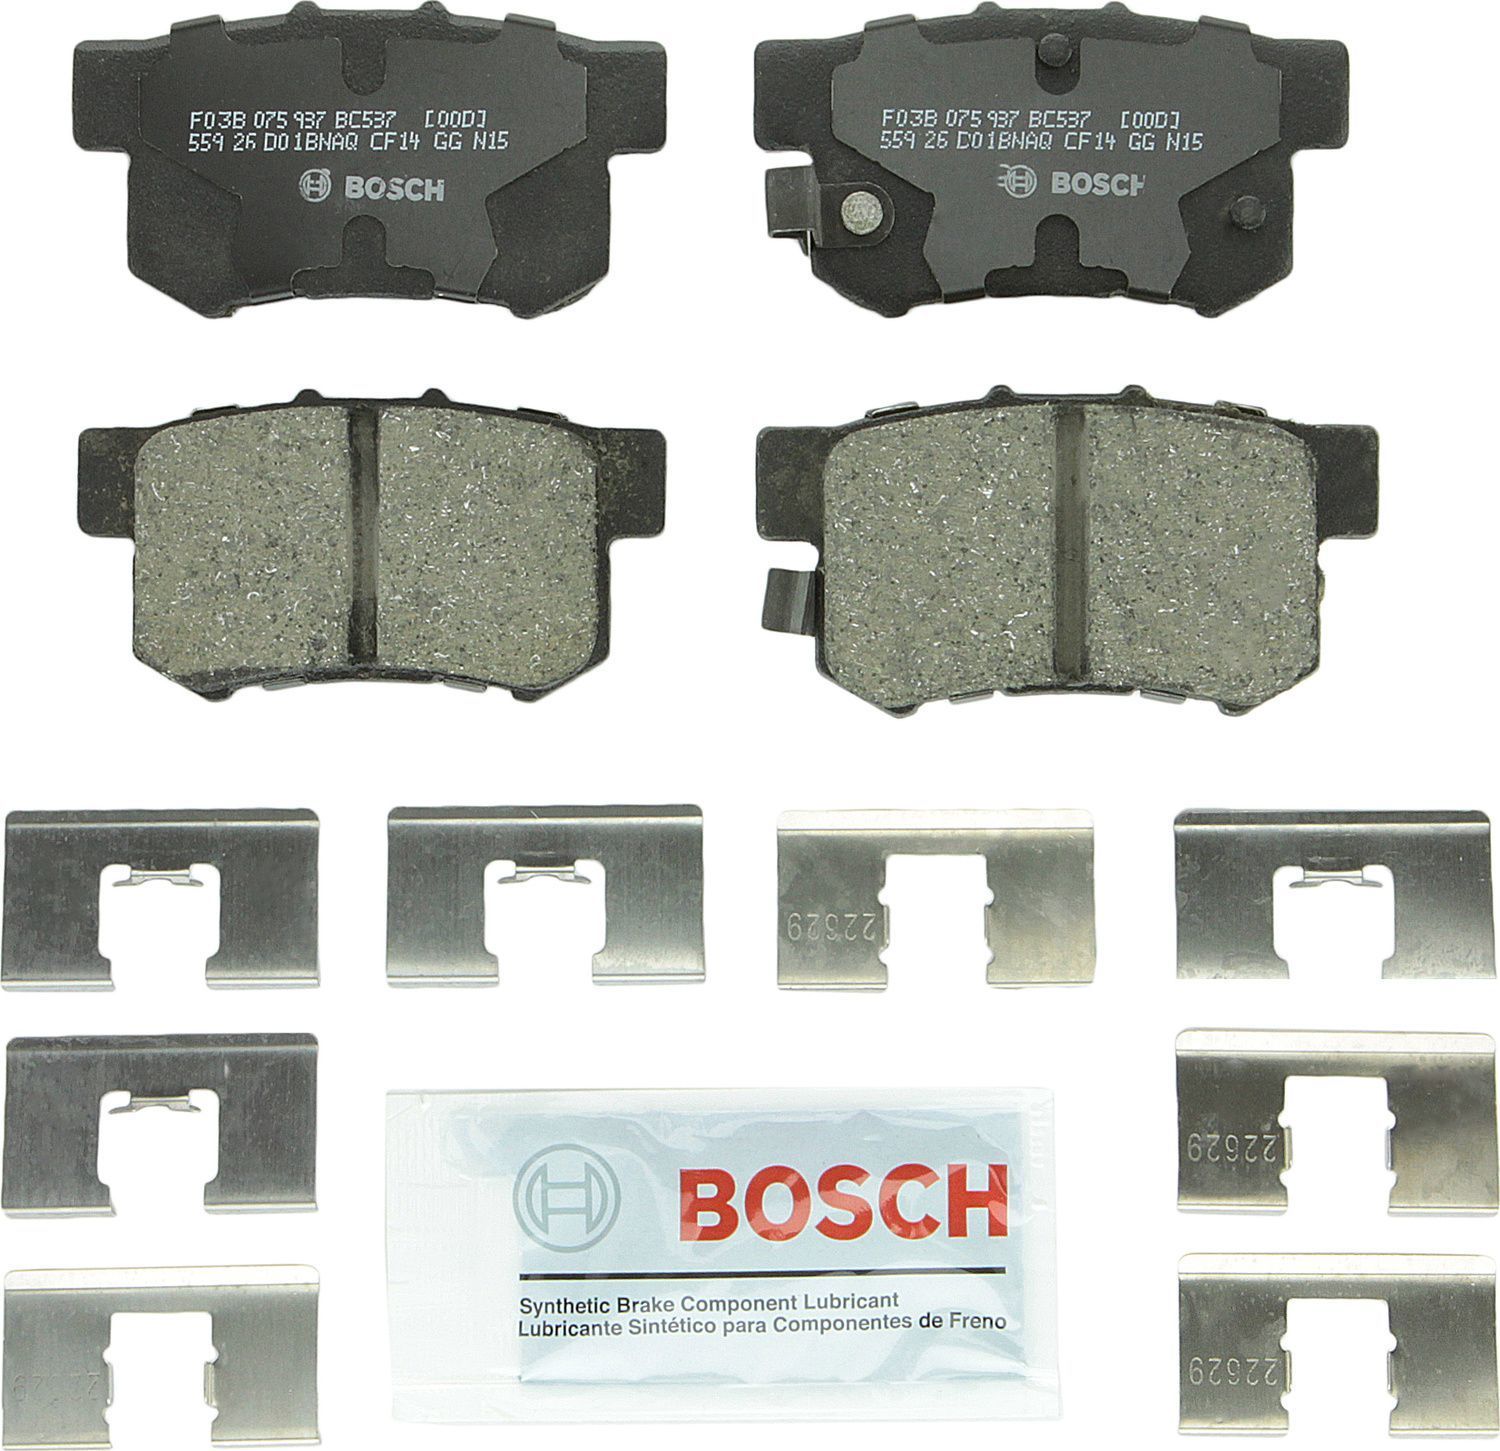 BOSCH BRAKE - Bosch QuietCast Brake Pad Ceramic Brake Pads (Rear) - BQC BC537